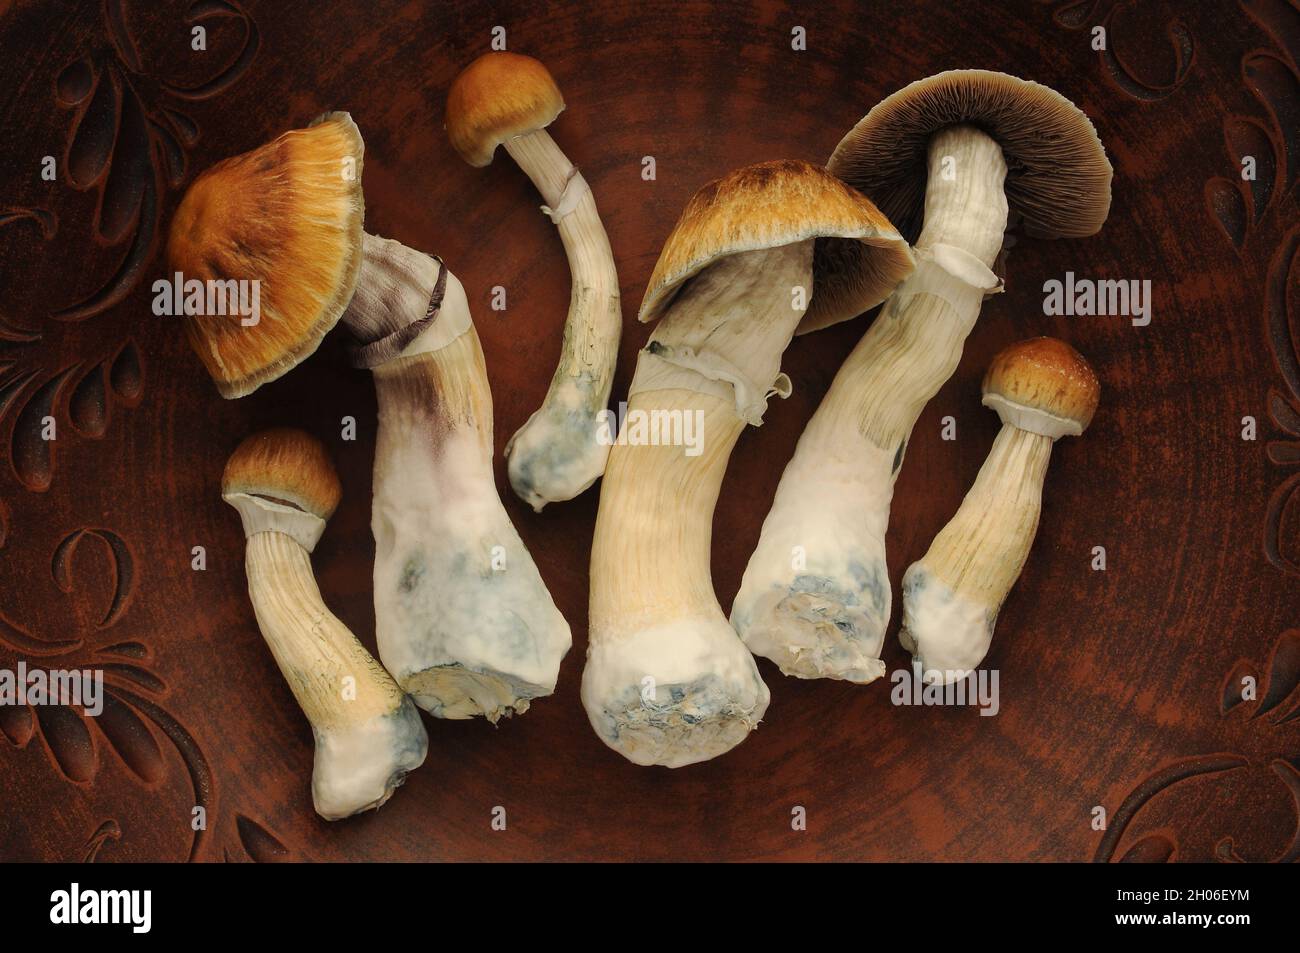 Psychedelic psilocybin mushrooms Golden Teacher, top view, close-up. Psilocybe Cubensis raw mushrooms in brown dish. Micro-dosing concept. Stock Photo